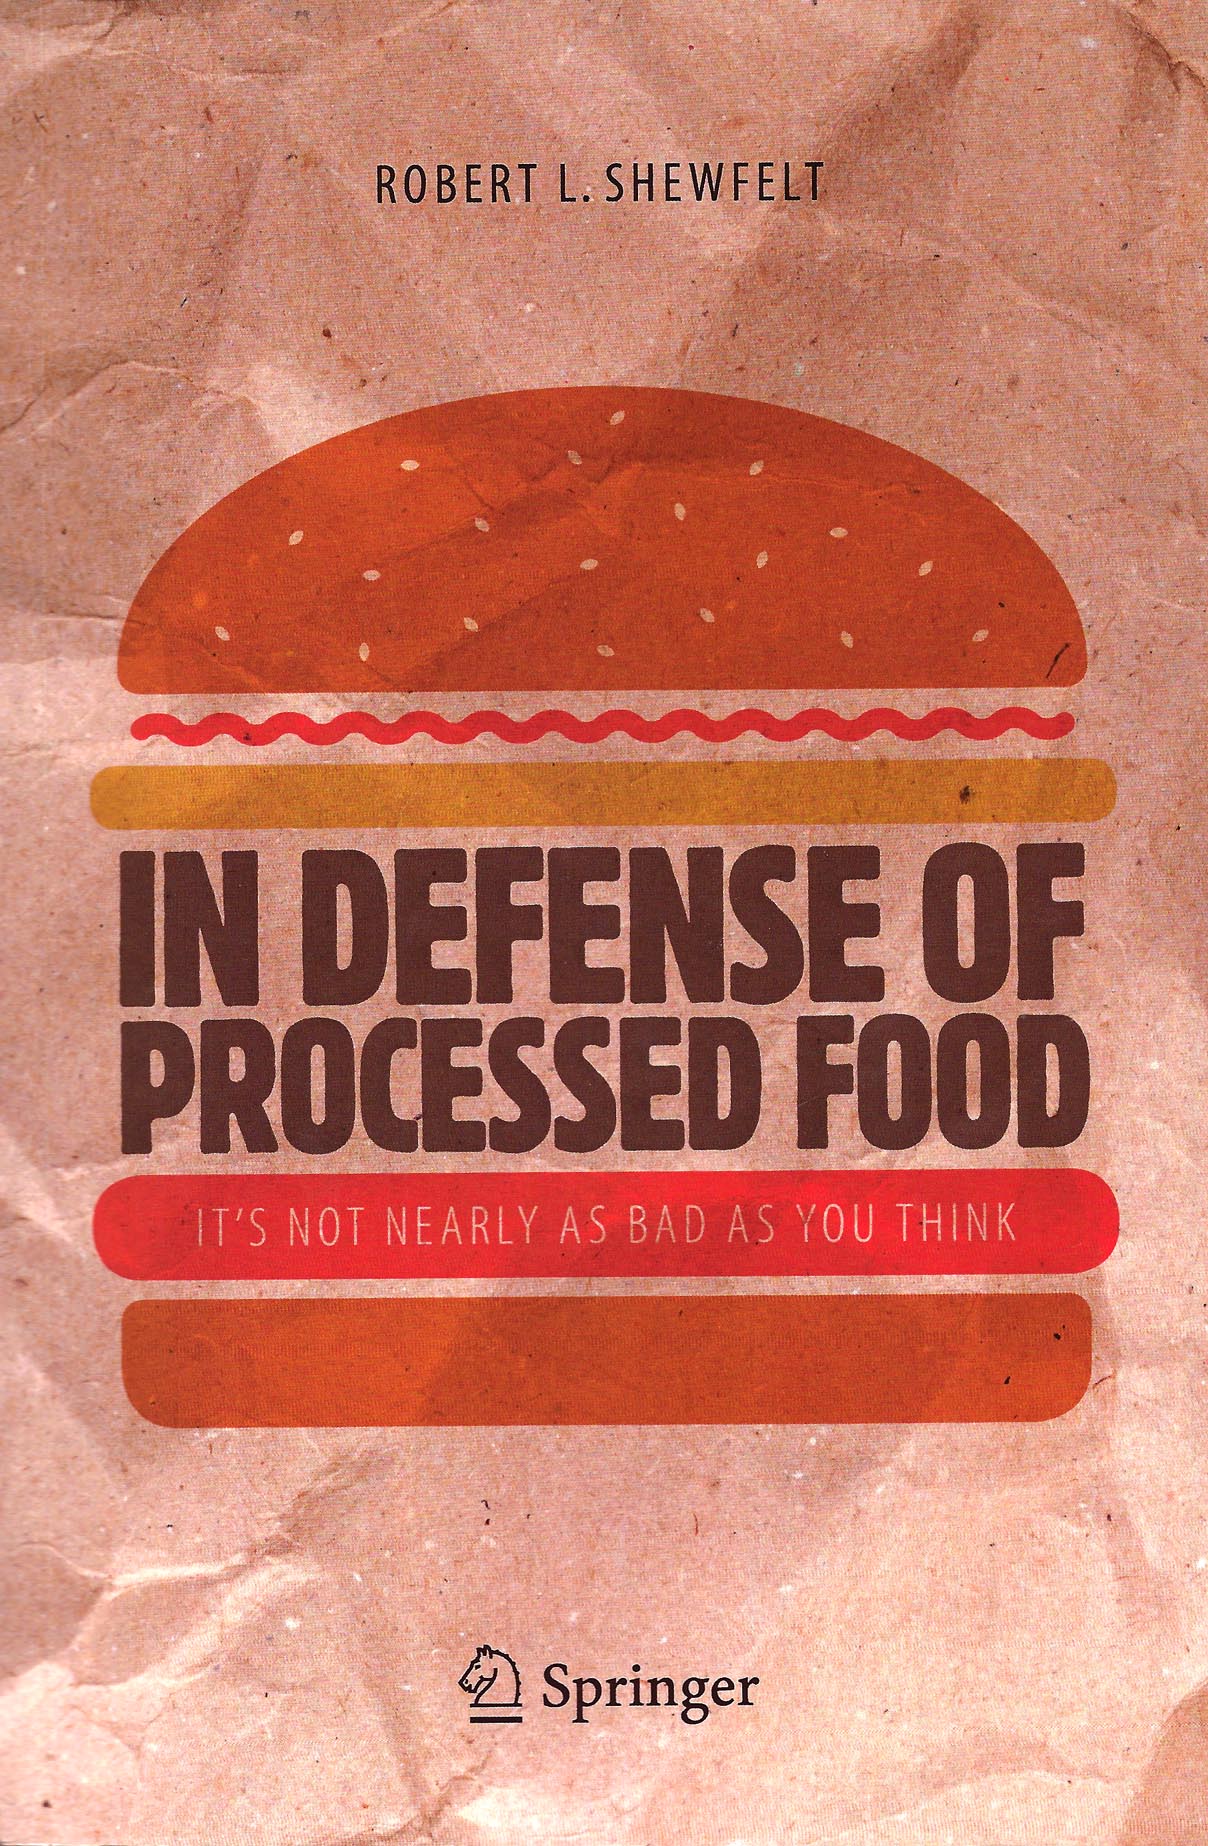 Ressenya llibre “In defense of Processed Food”